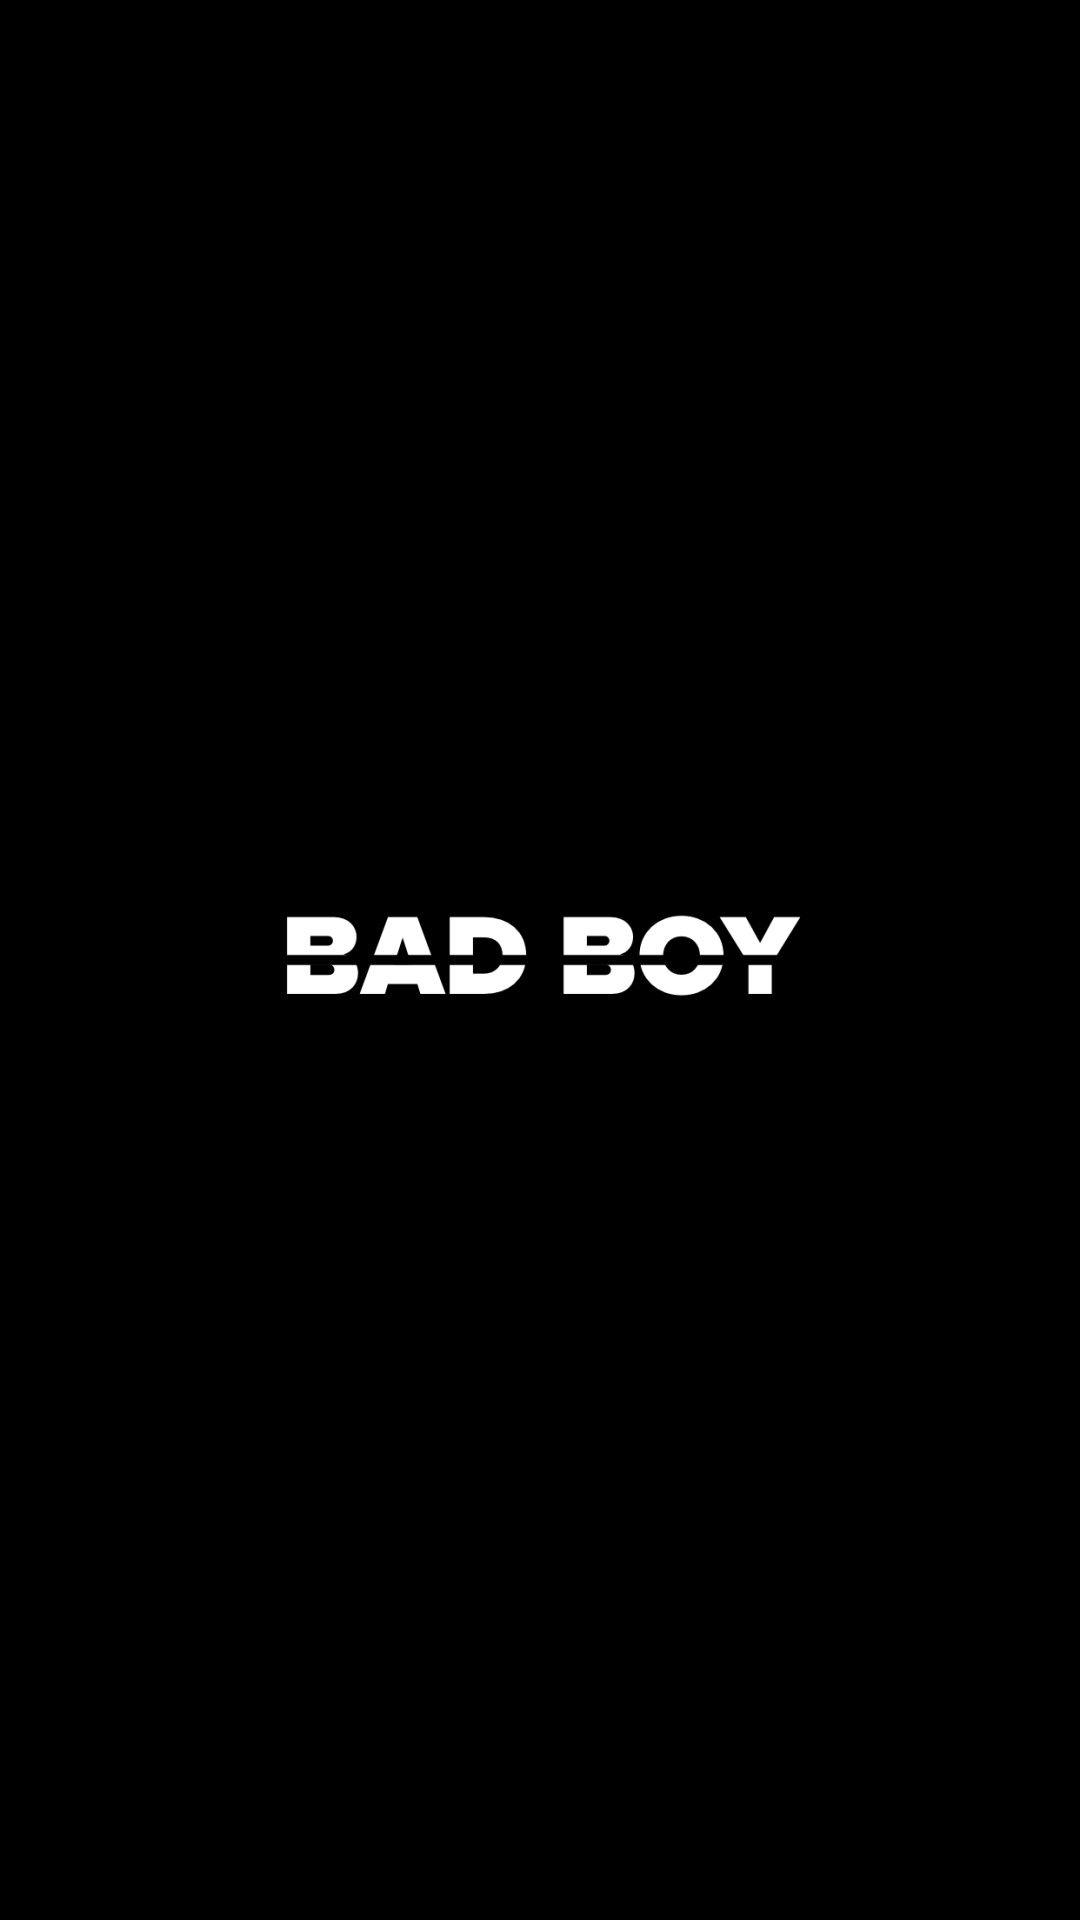 Bad boy wallpaper by Jeevageditz  Download on ZEDGE  8548